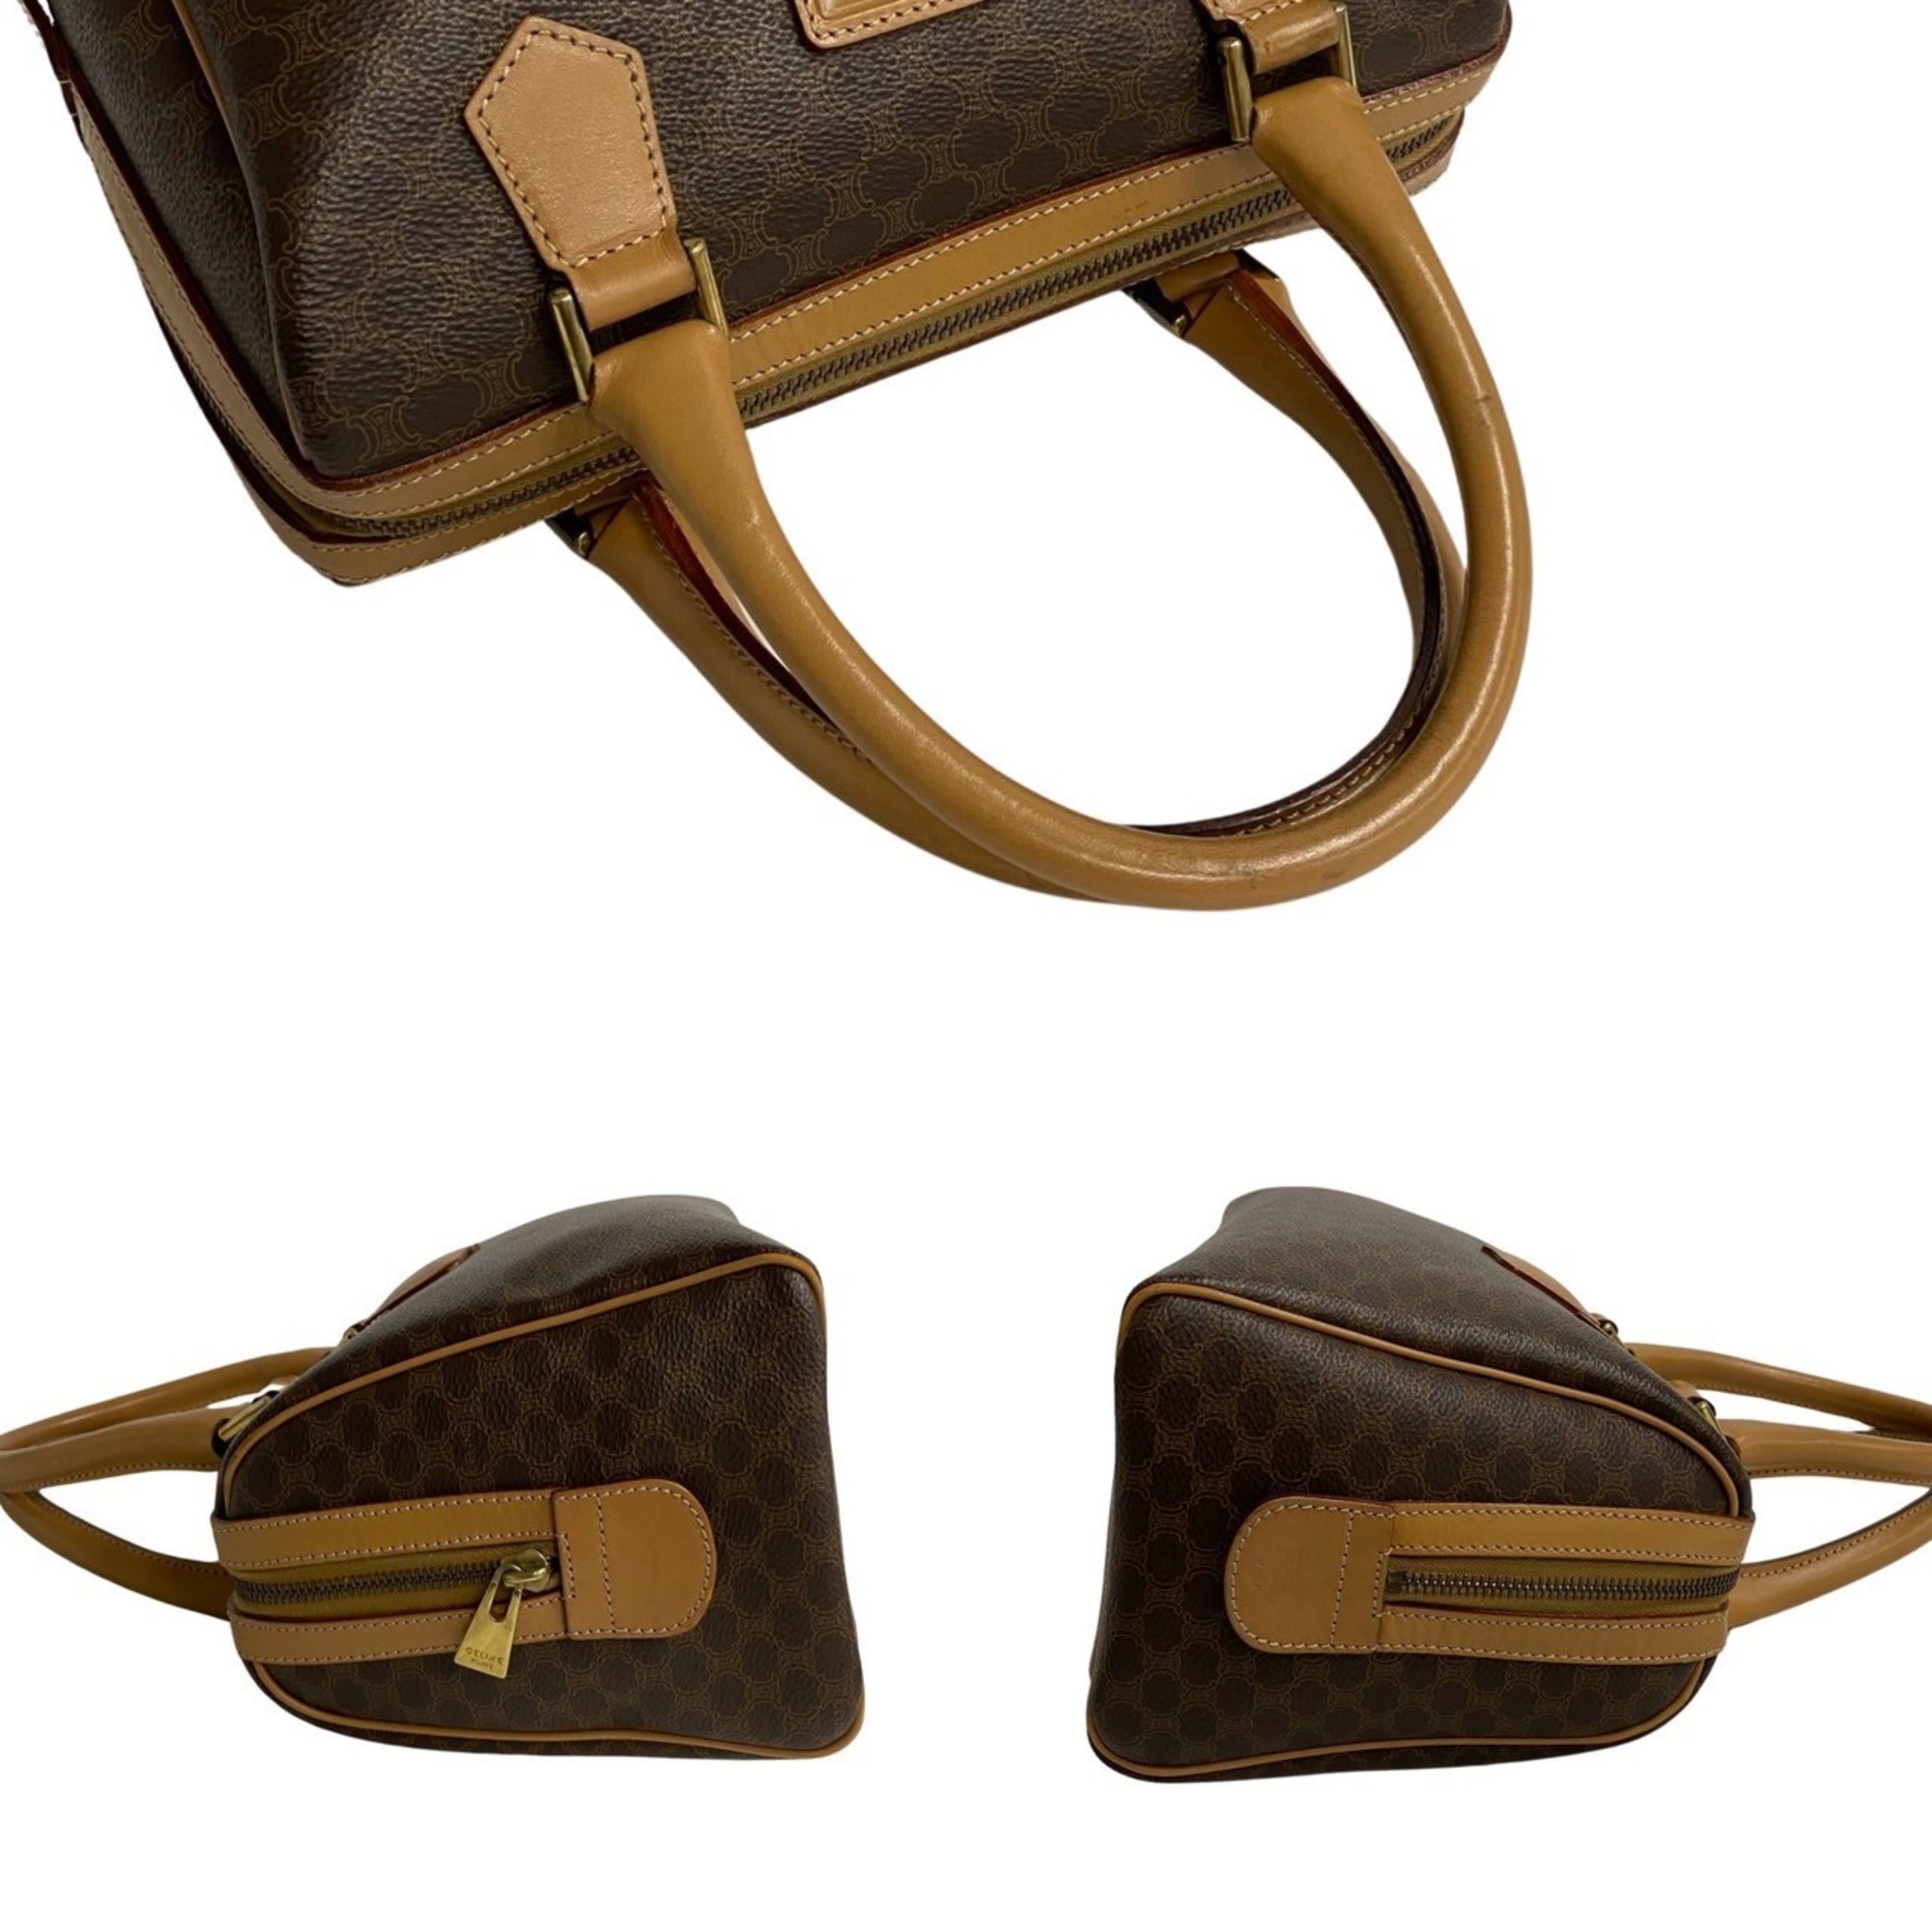 CELINE Macadam Blason Triomphe Pattern Leather Handbag Boston Bag Brown 21070